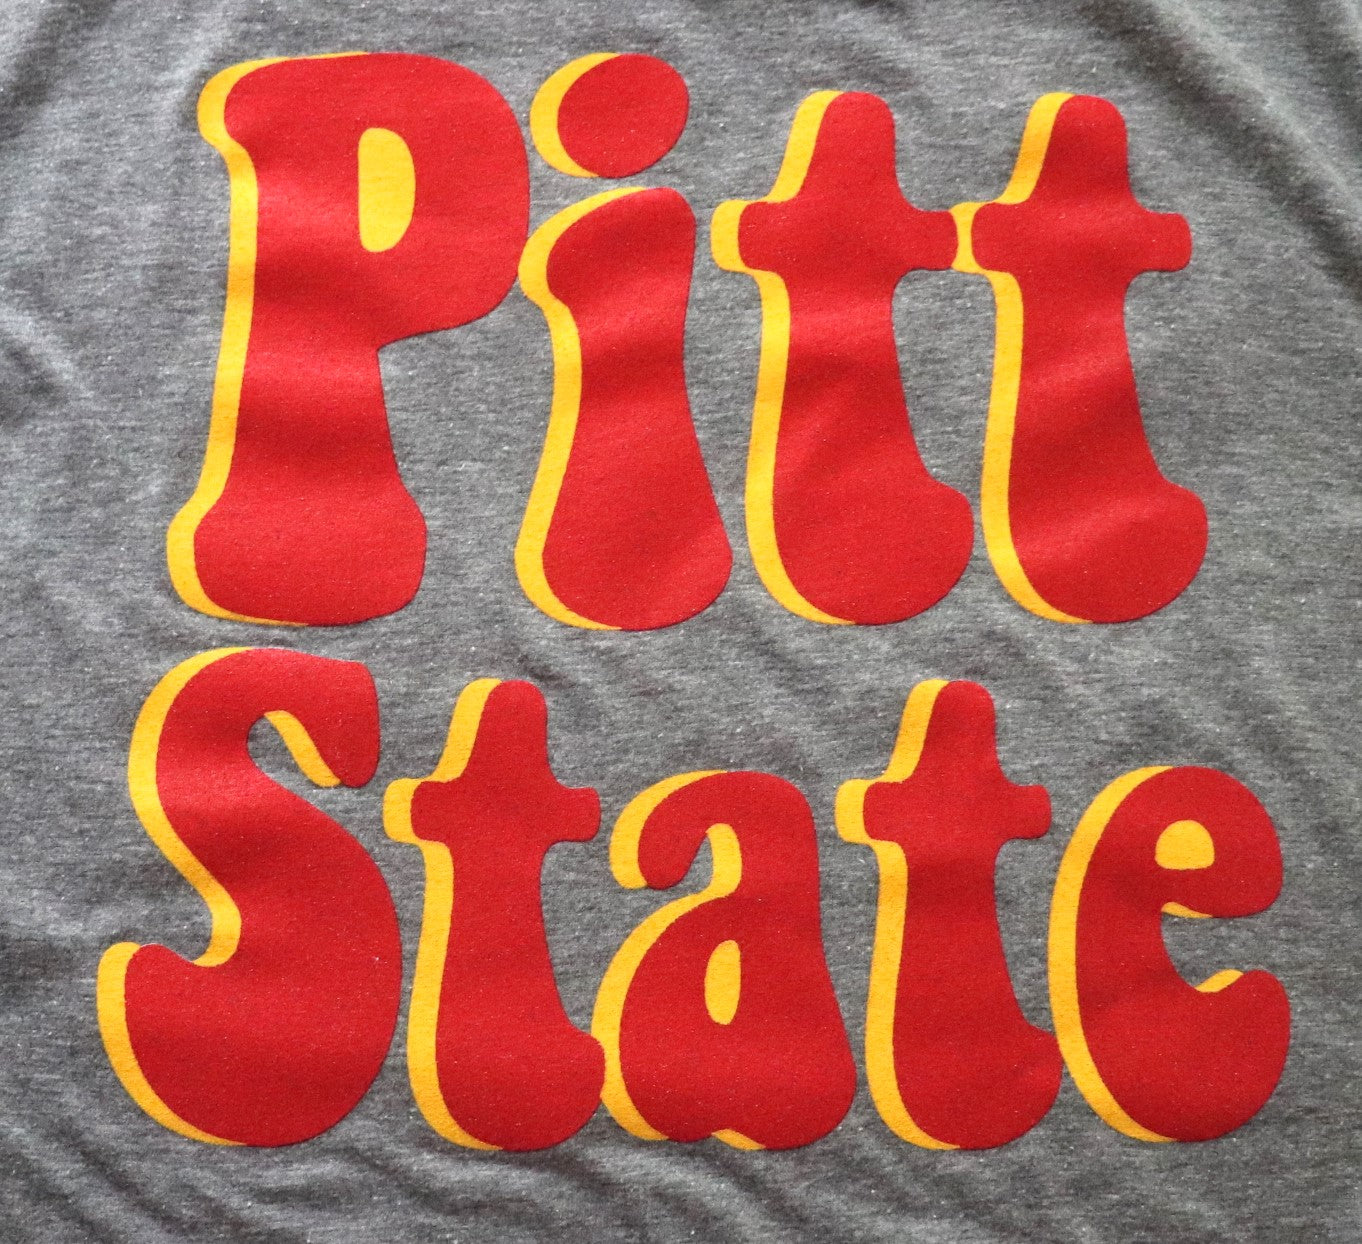 Pitt State Bubble Letters